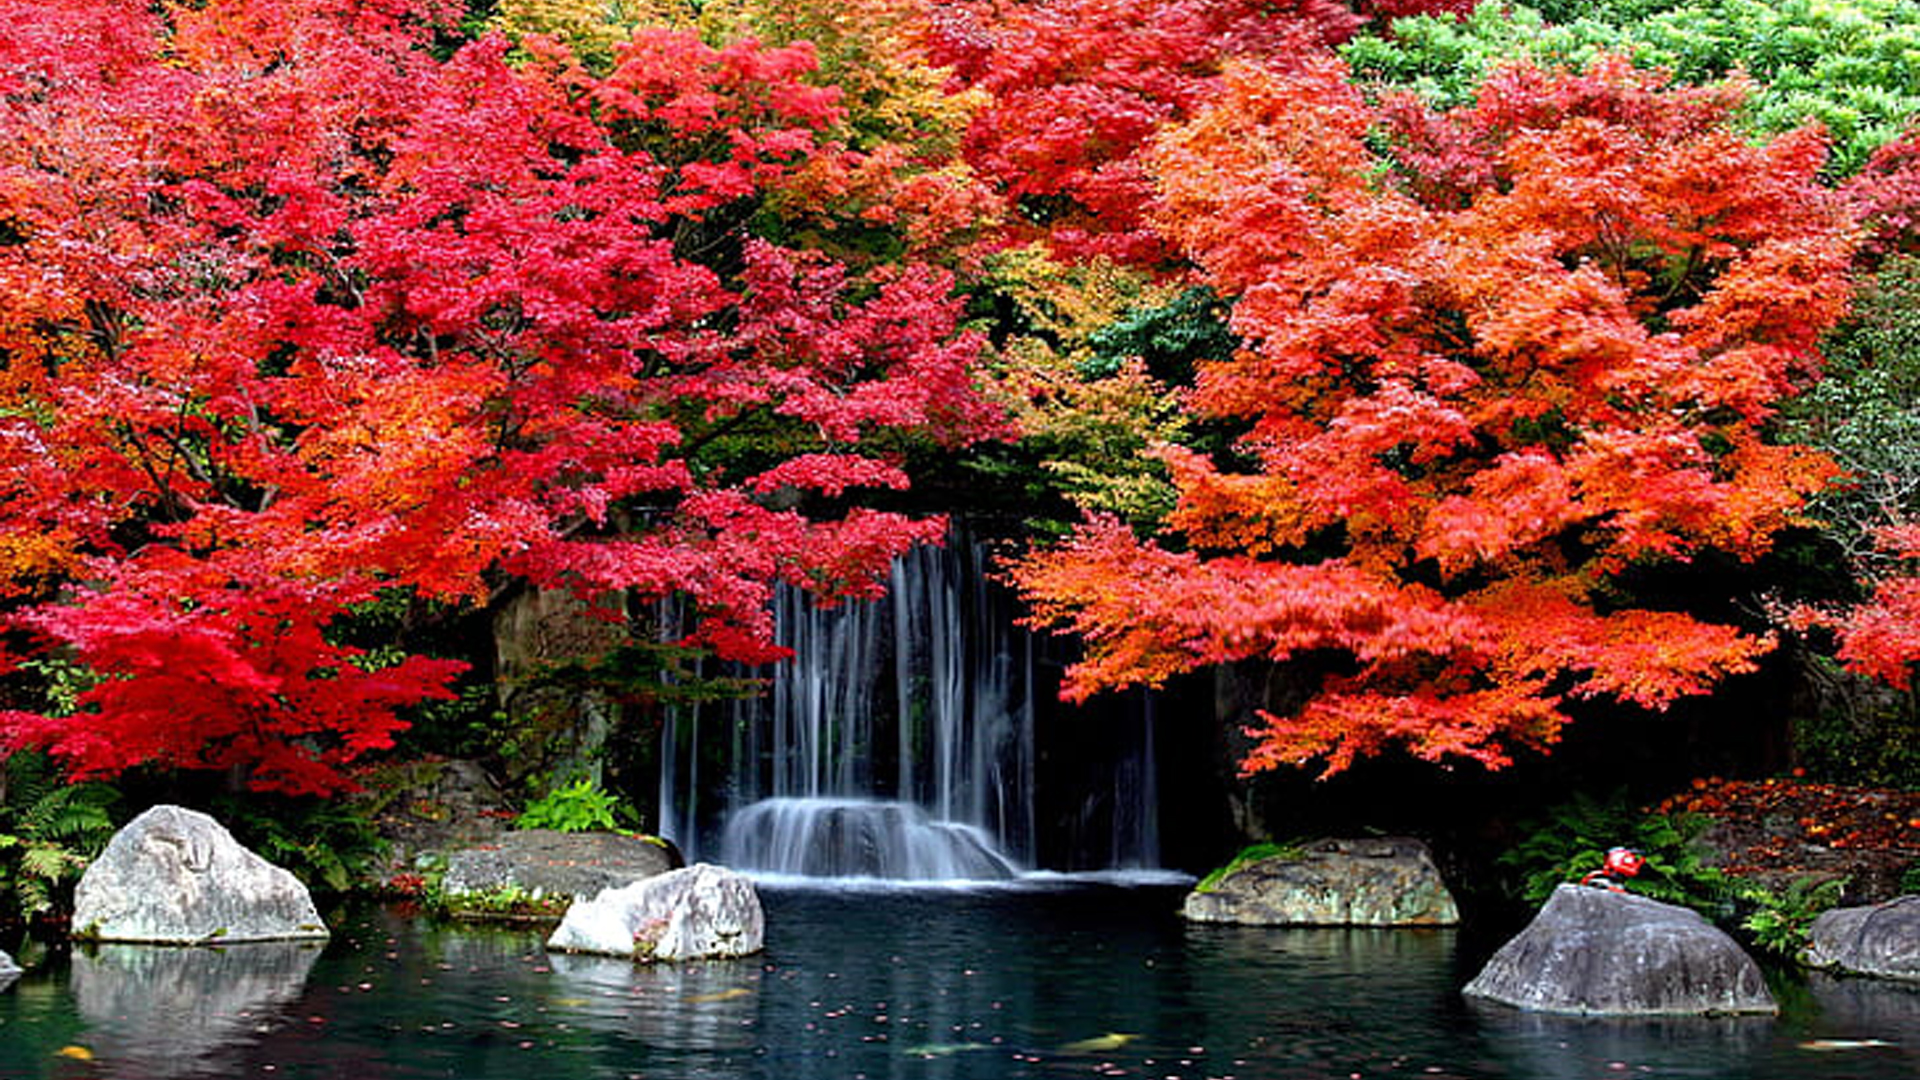 Beautiful Waterfalls Autumn Red Yellow Orange Green Leaves Trees Stones Pond 2K Autumn